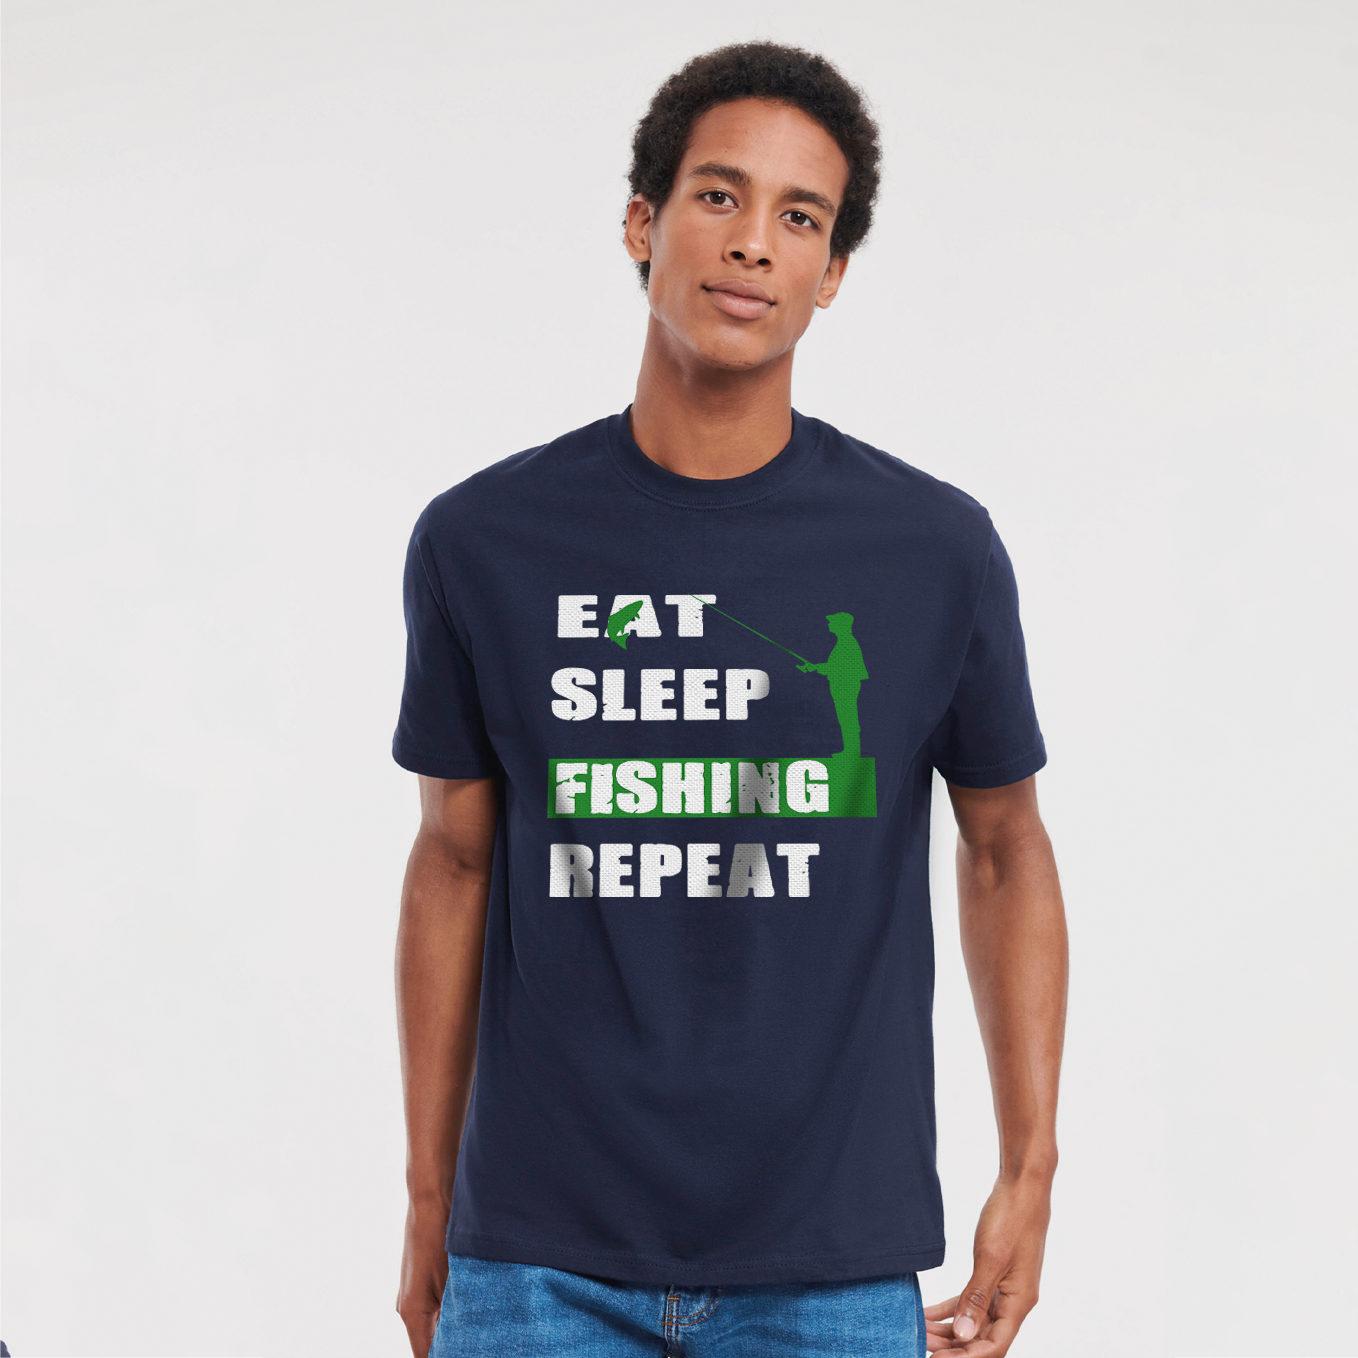 T-shirt "Eat Sleep Fishing Repeat"